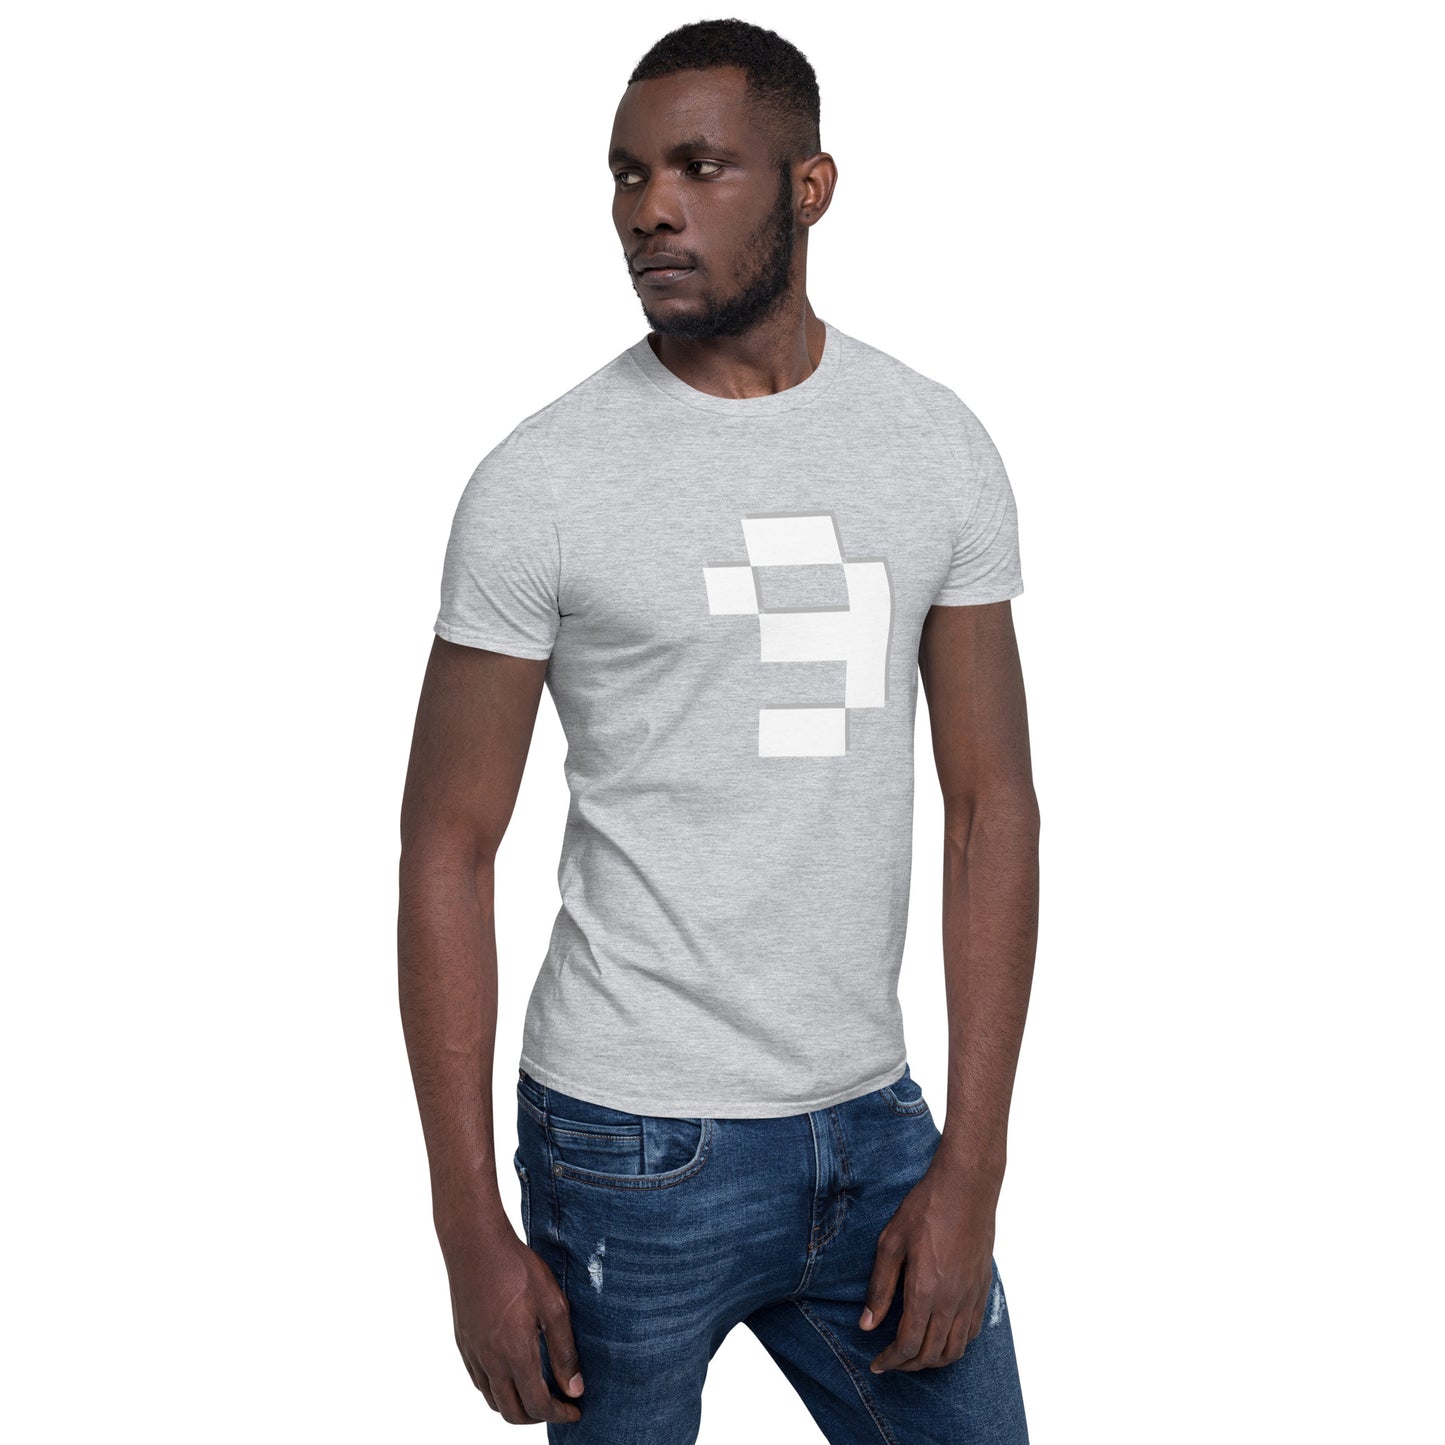 number9ine 9 (1) Short-Sleeve Unisex T-Shirt